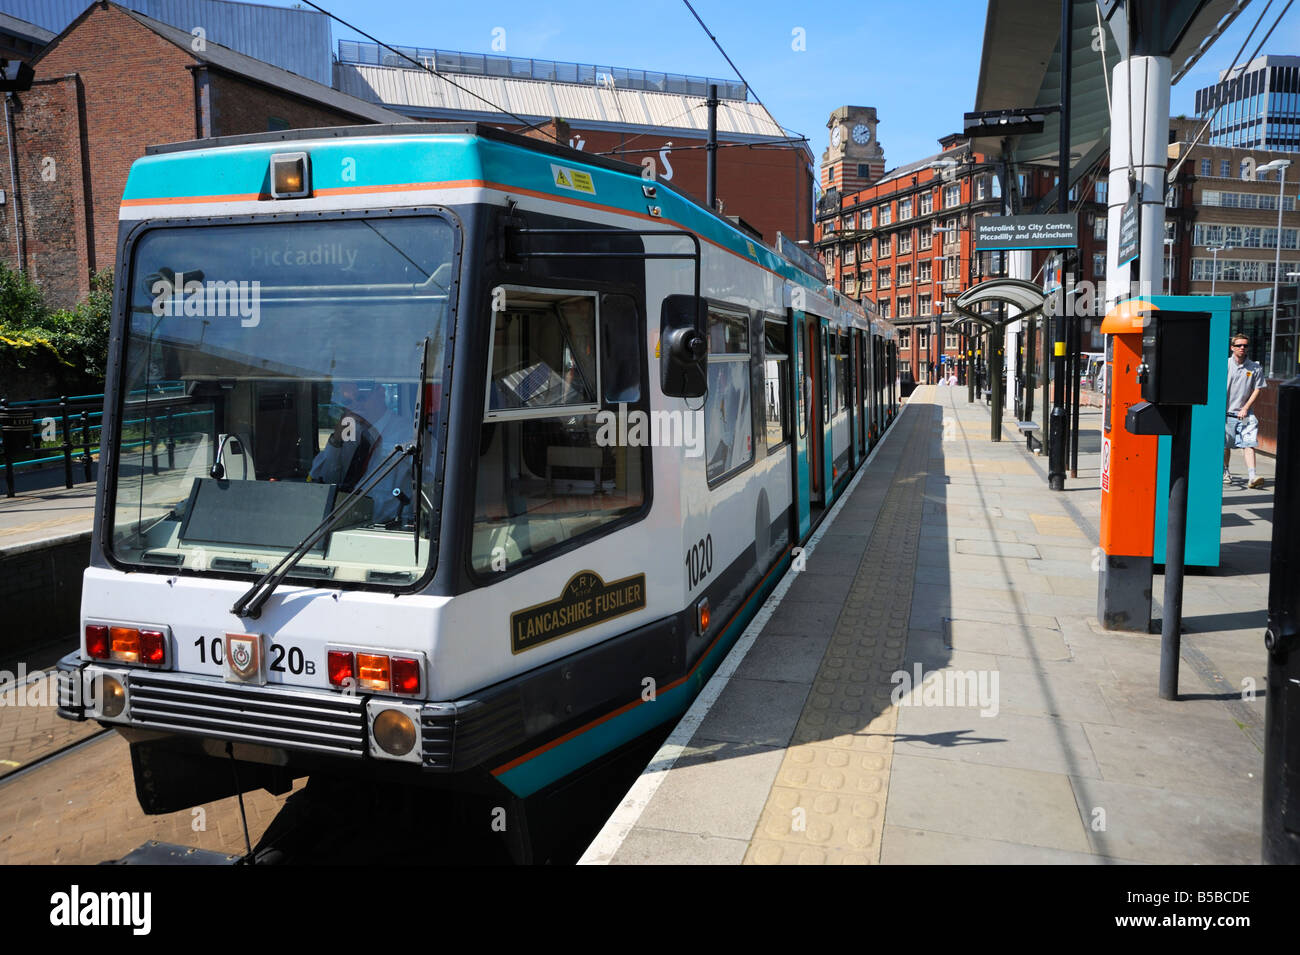 Metrolink tram at tram stop, Manchester, England, Europe Stock Photo